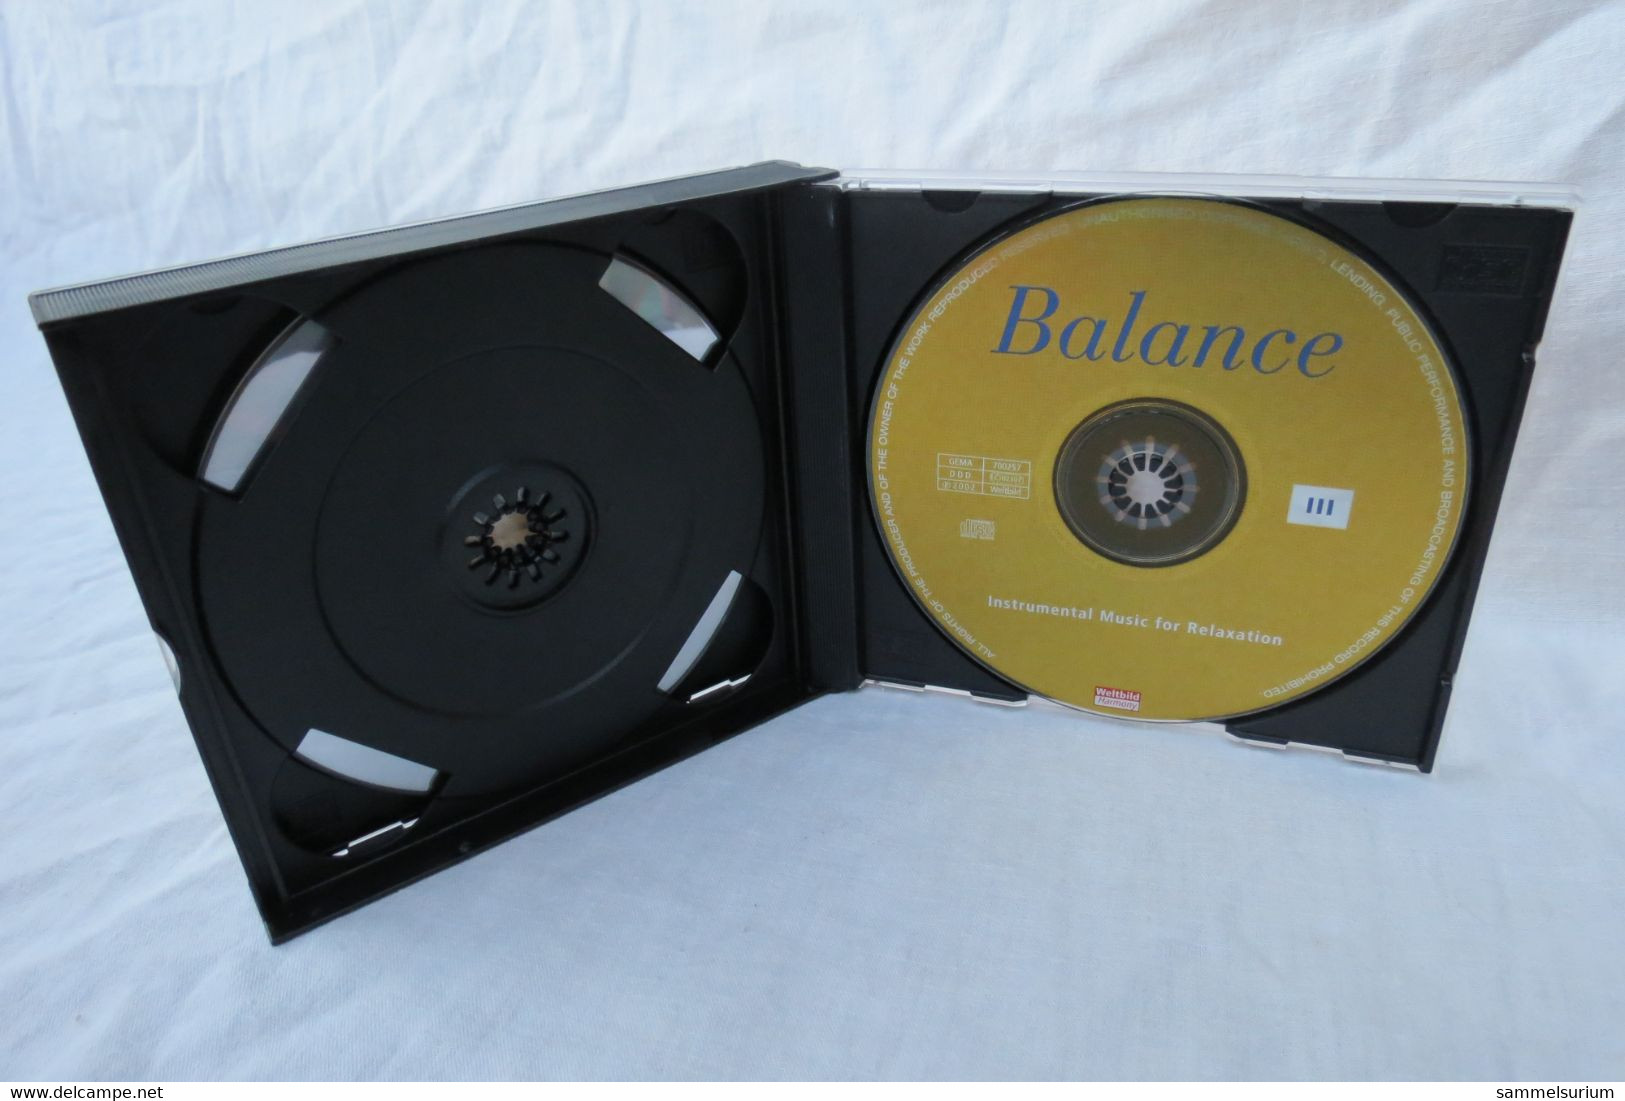 3 CDs "Balance" Instrumental Music For Relaxation - Strumentali